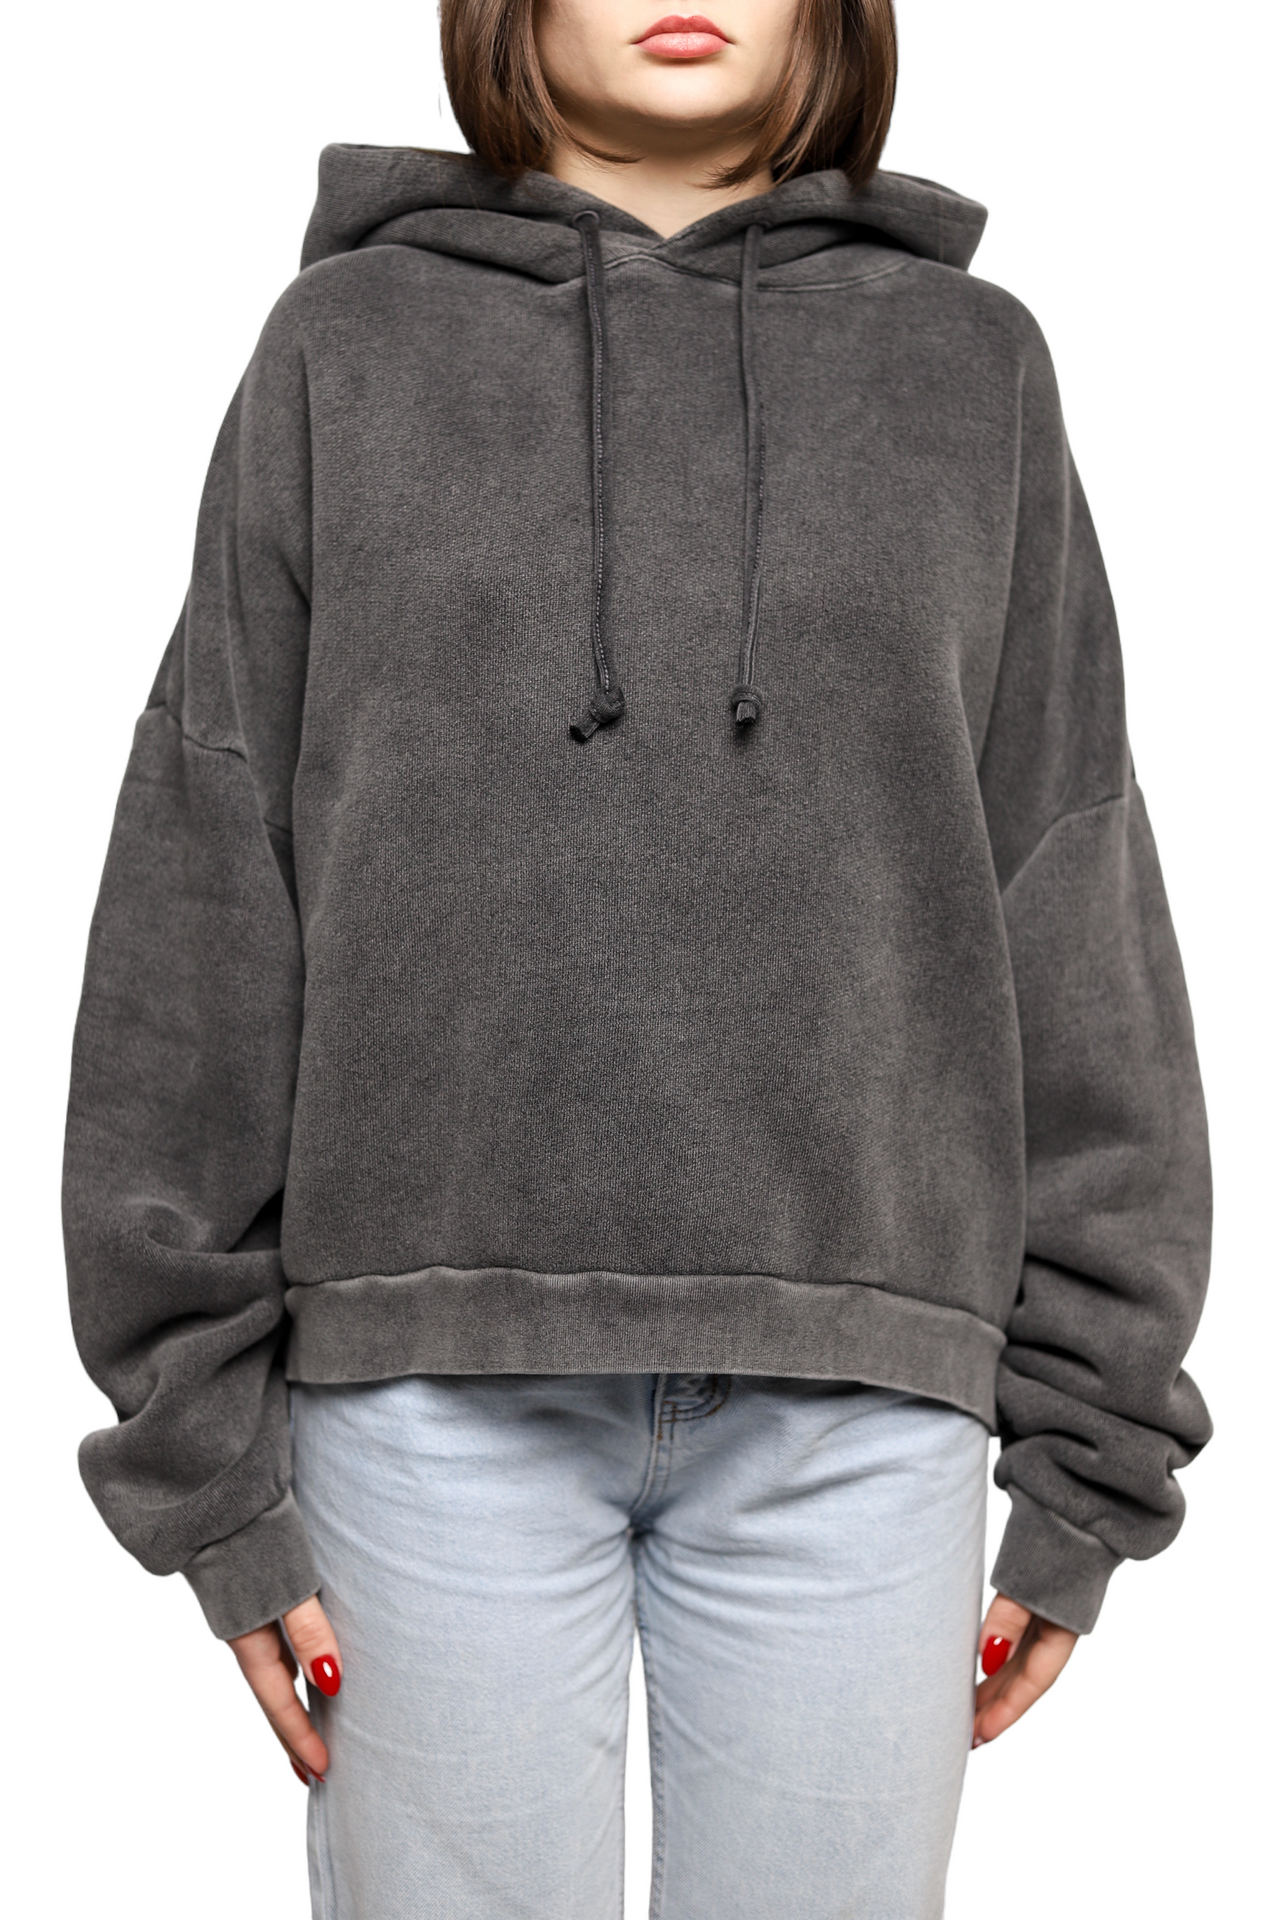 Acne Studios Relaxed Hooded Sweatshirt Faded Black